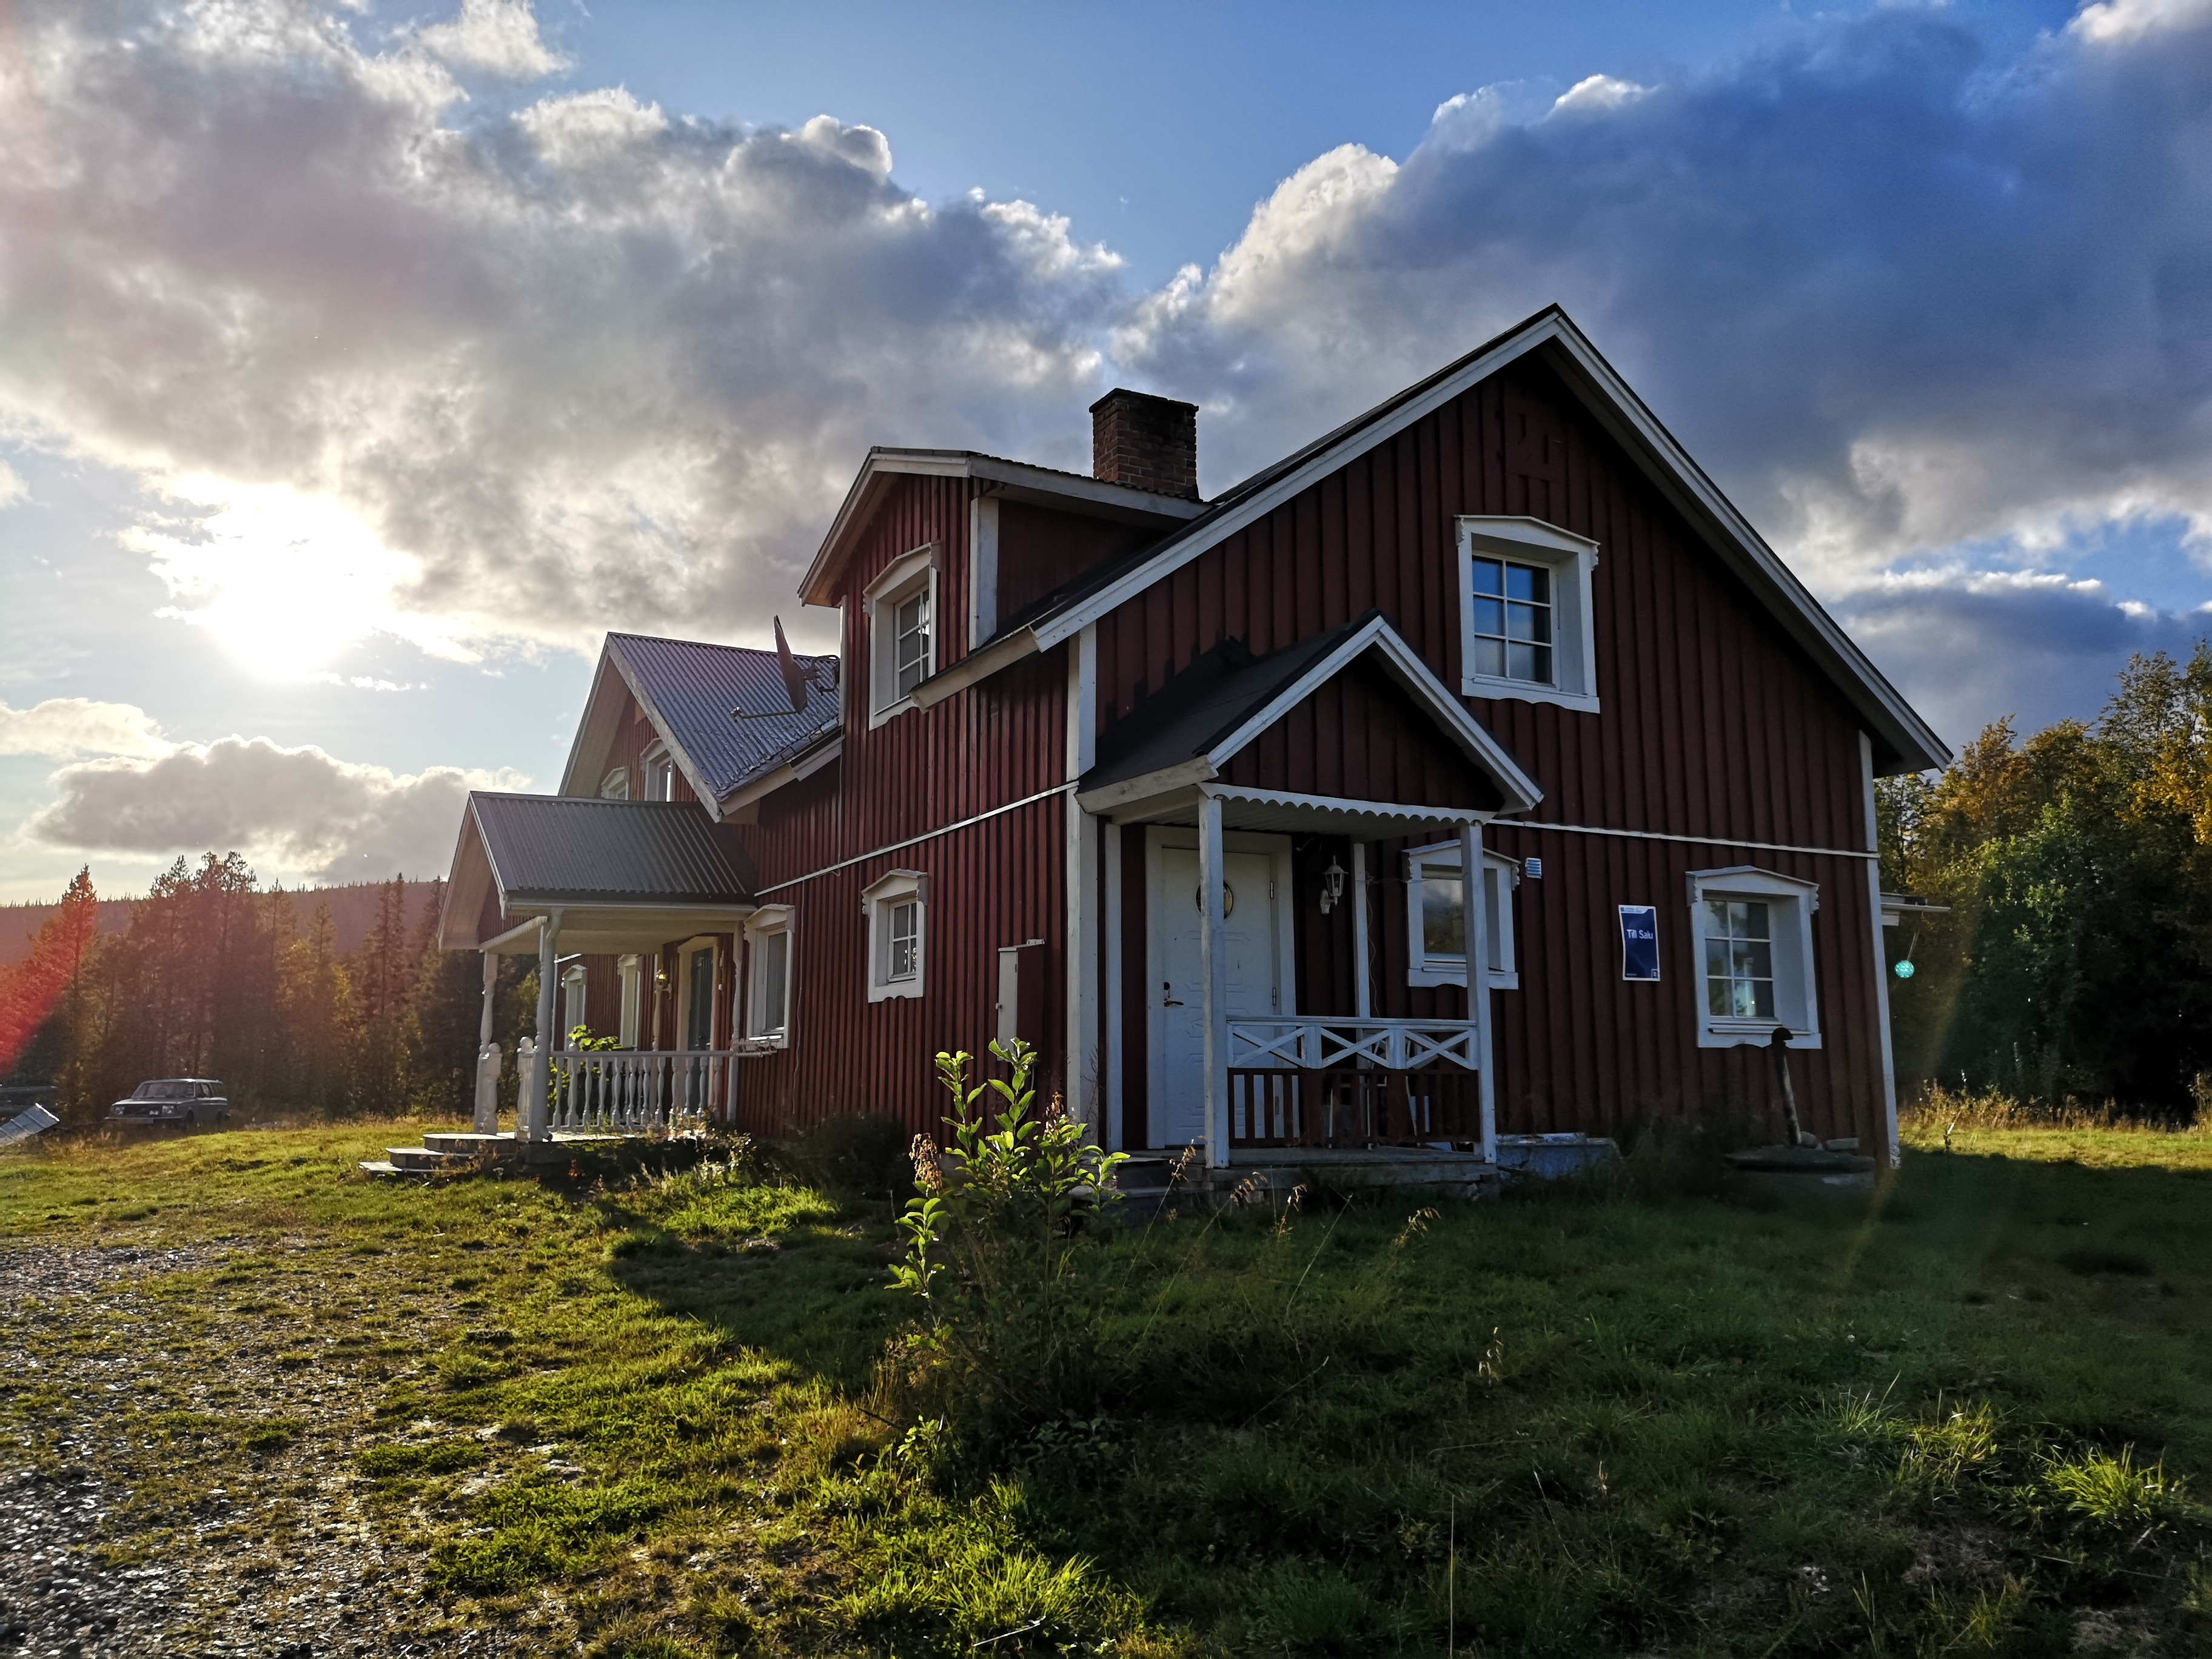 Haus am See in Schweden / Lappland - Ants In Pants Tours